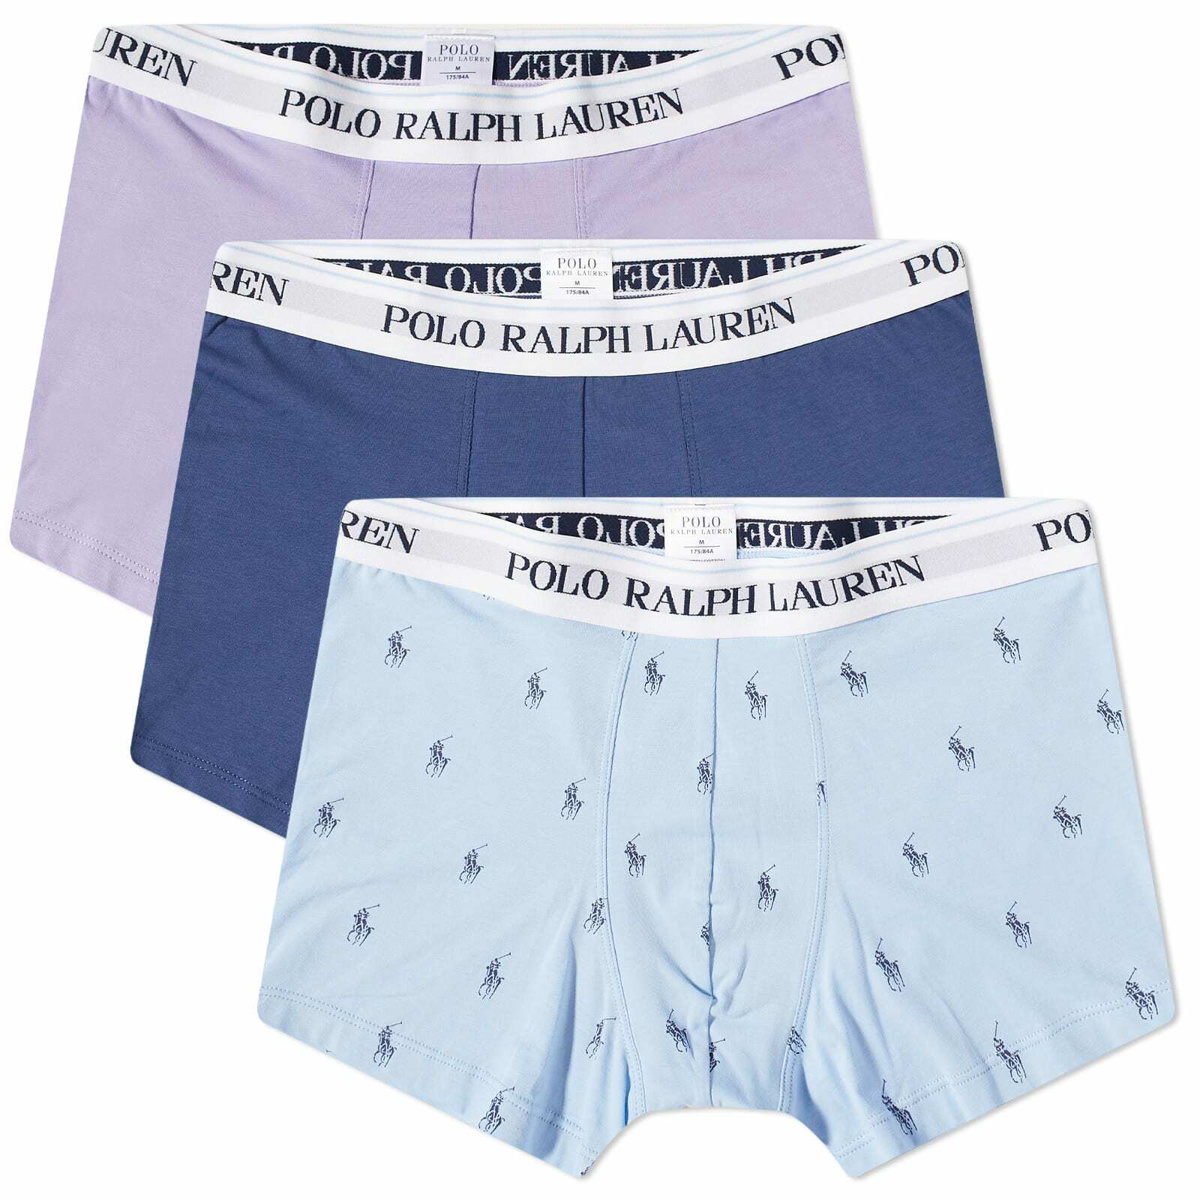 Polo Ralph Lauren Men's Classic Trunk - 3 Pack in Lavender/Blue Aop ...